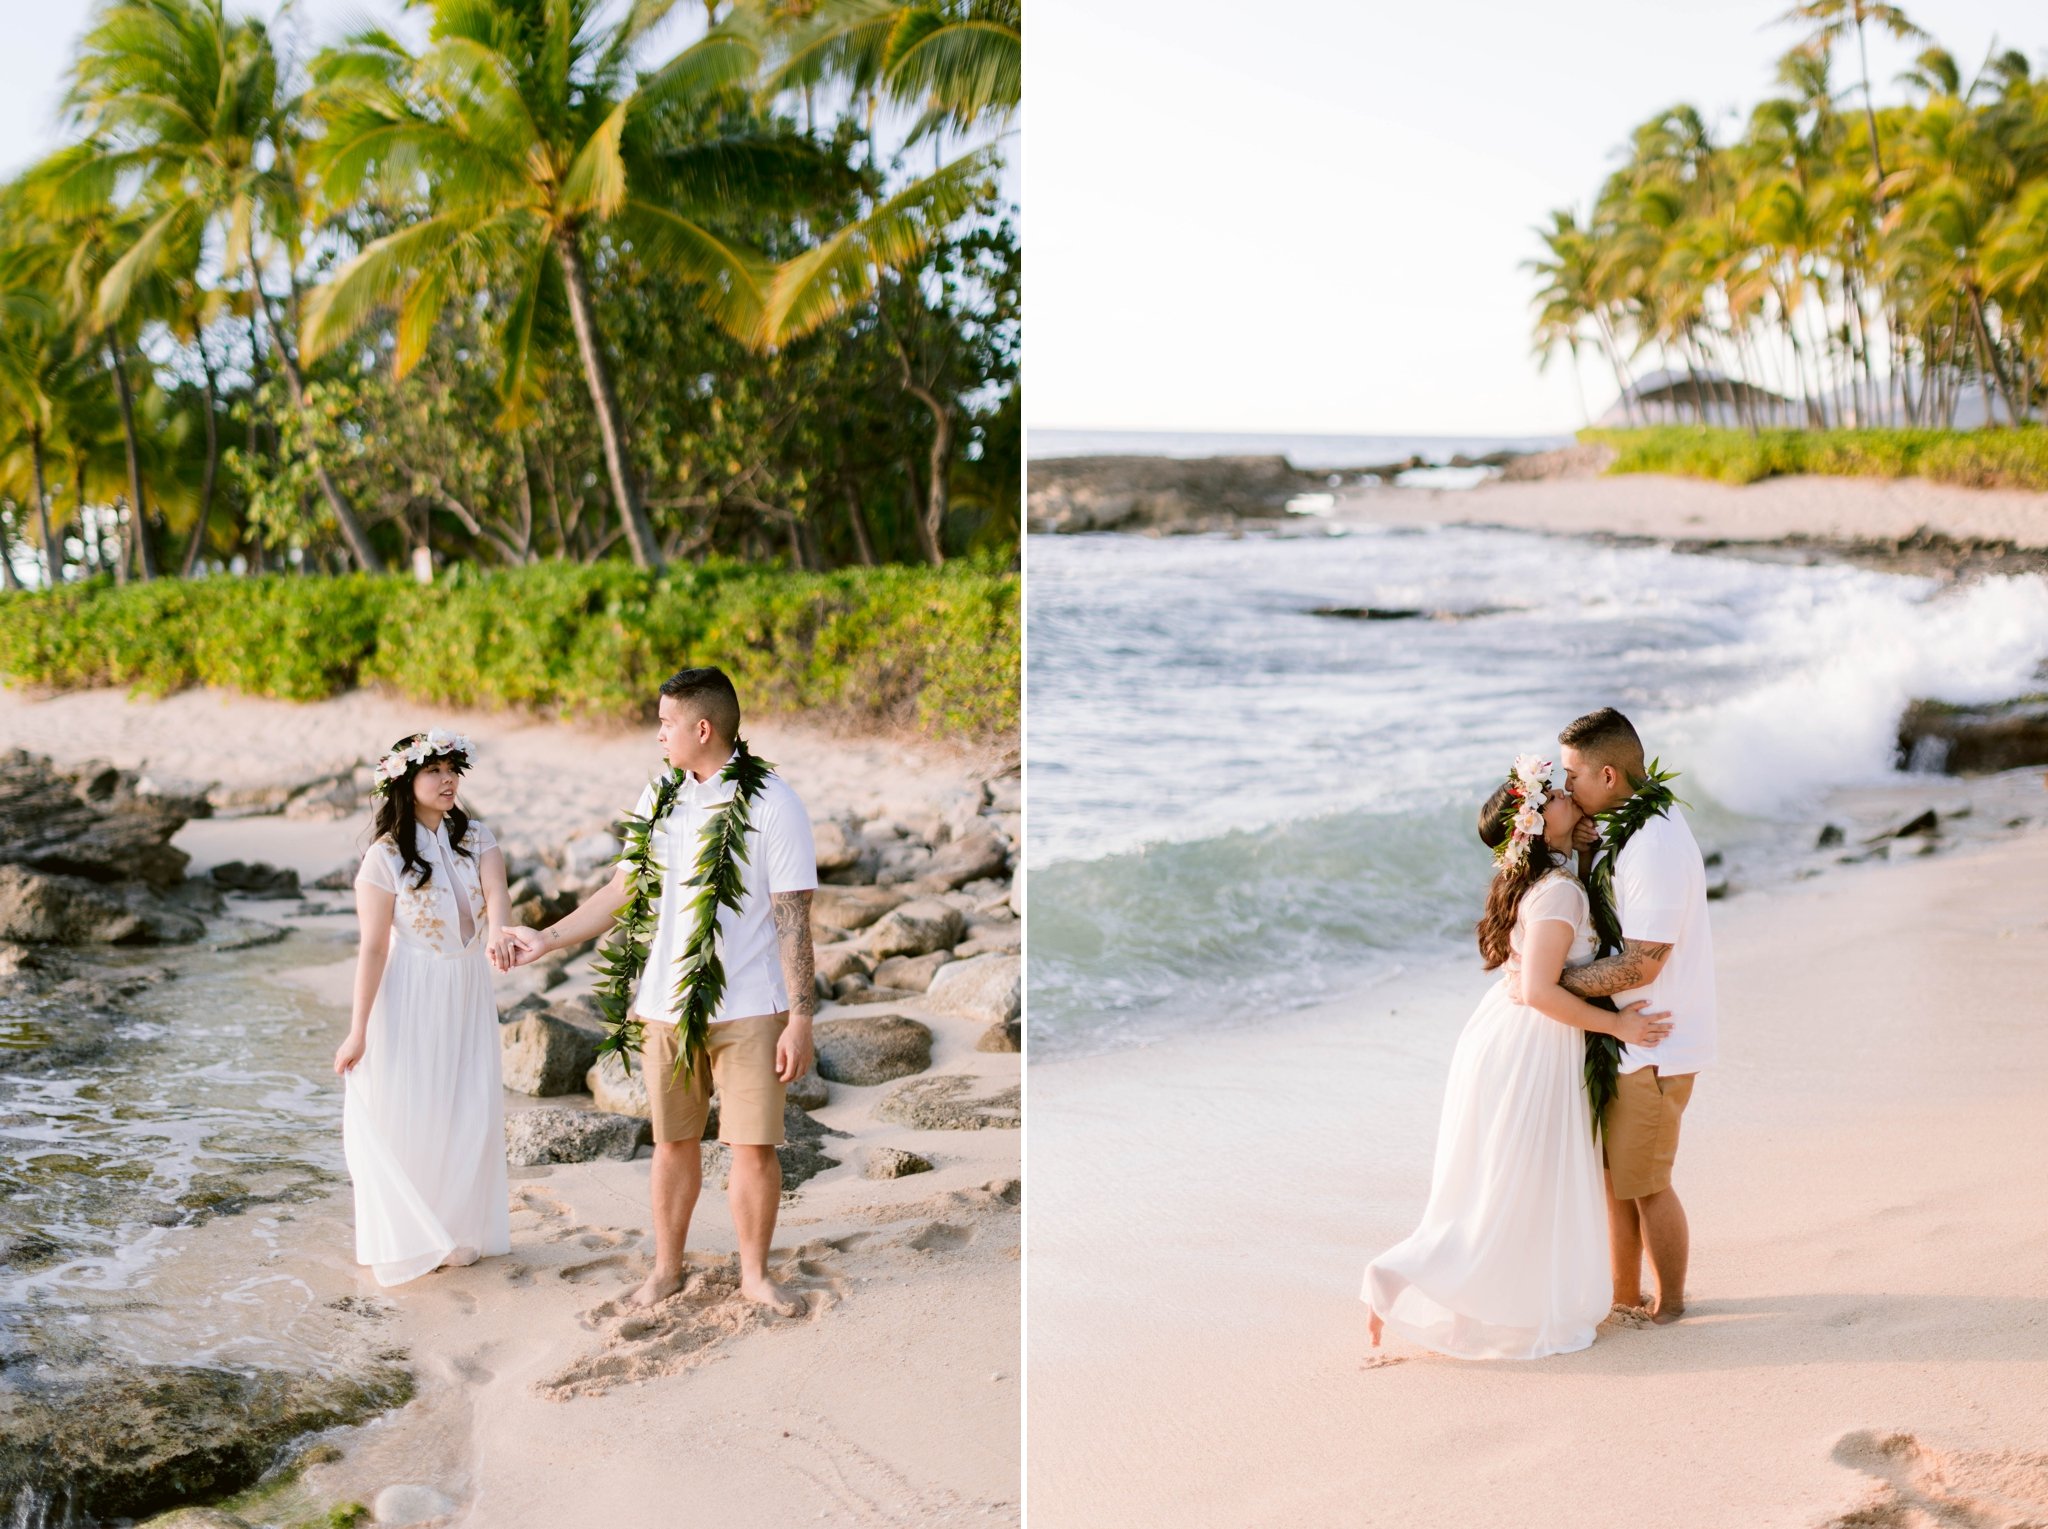 Ko Olina Secret Beach Engagement Session - Oahu, Hawaii Photographer 